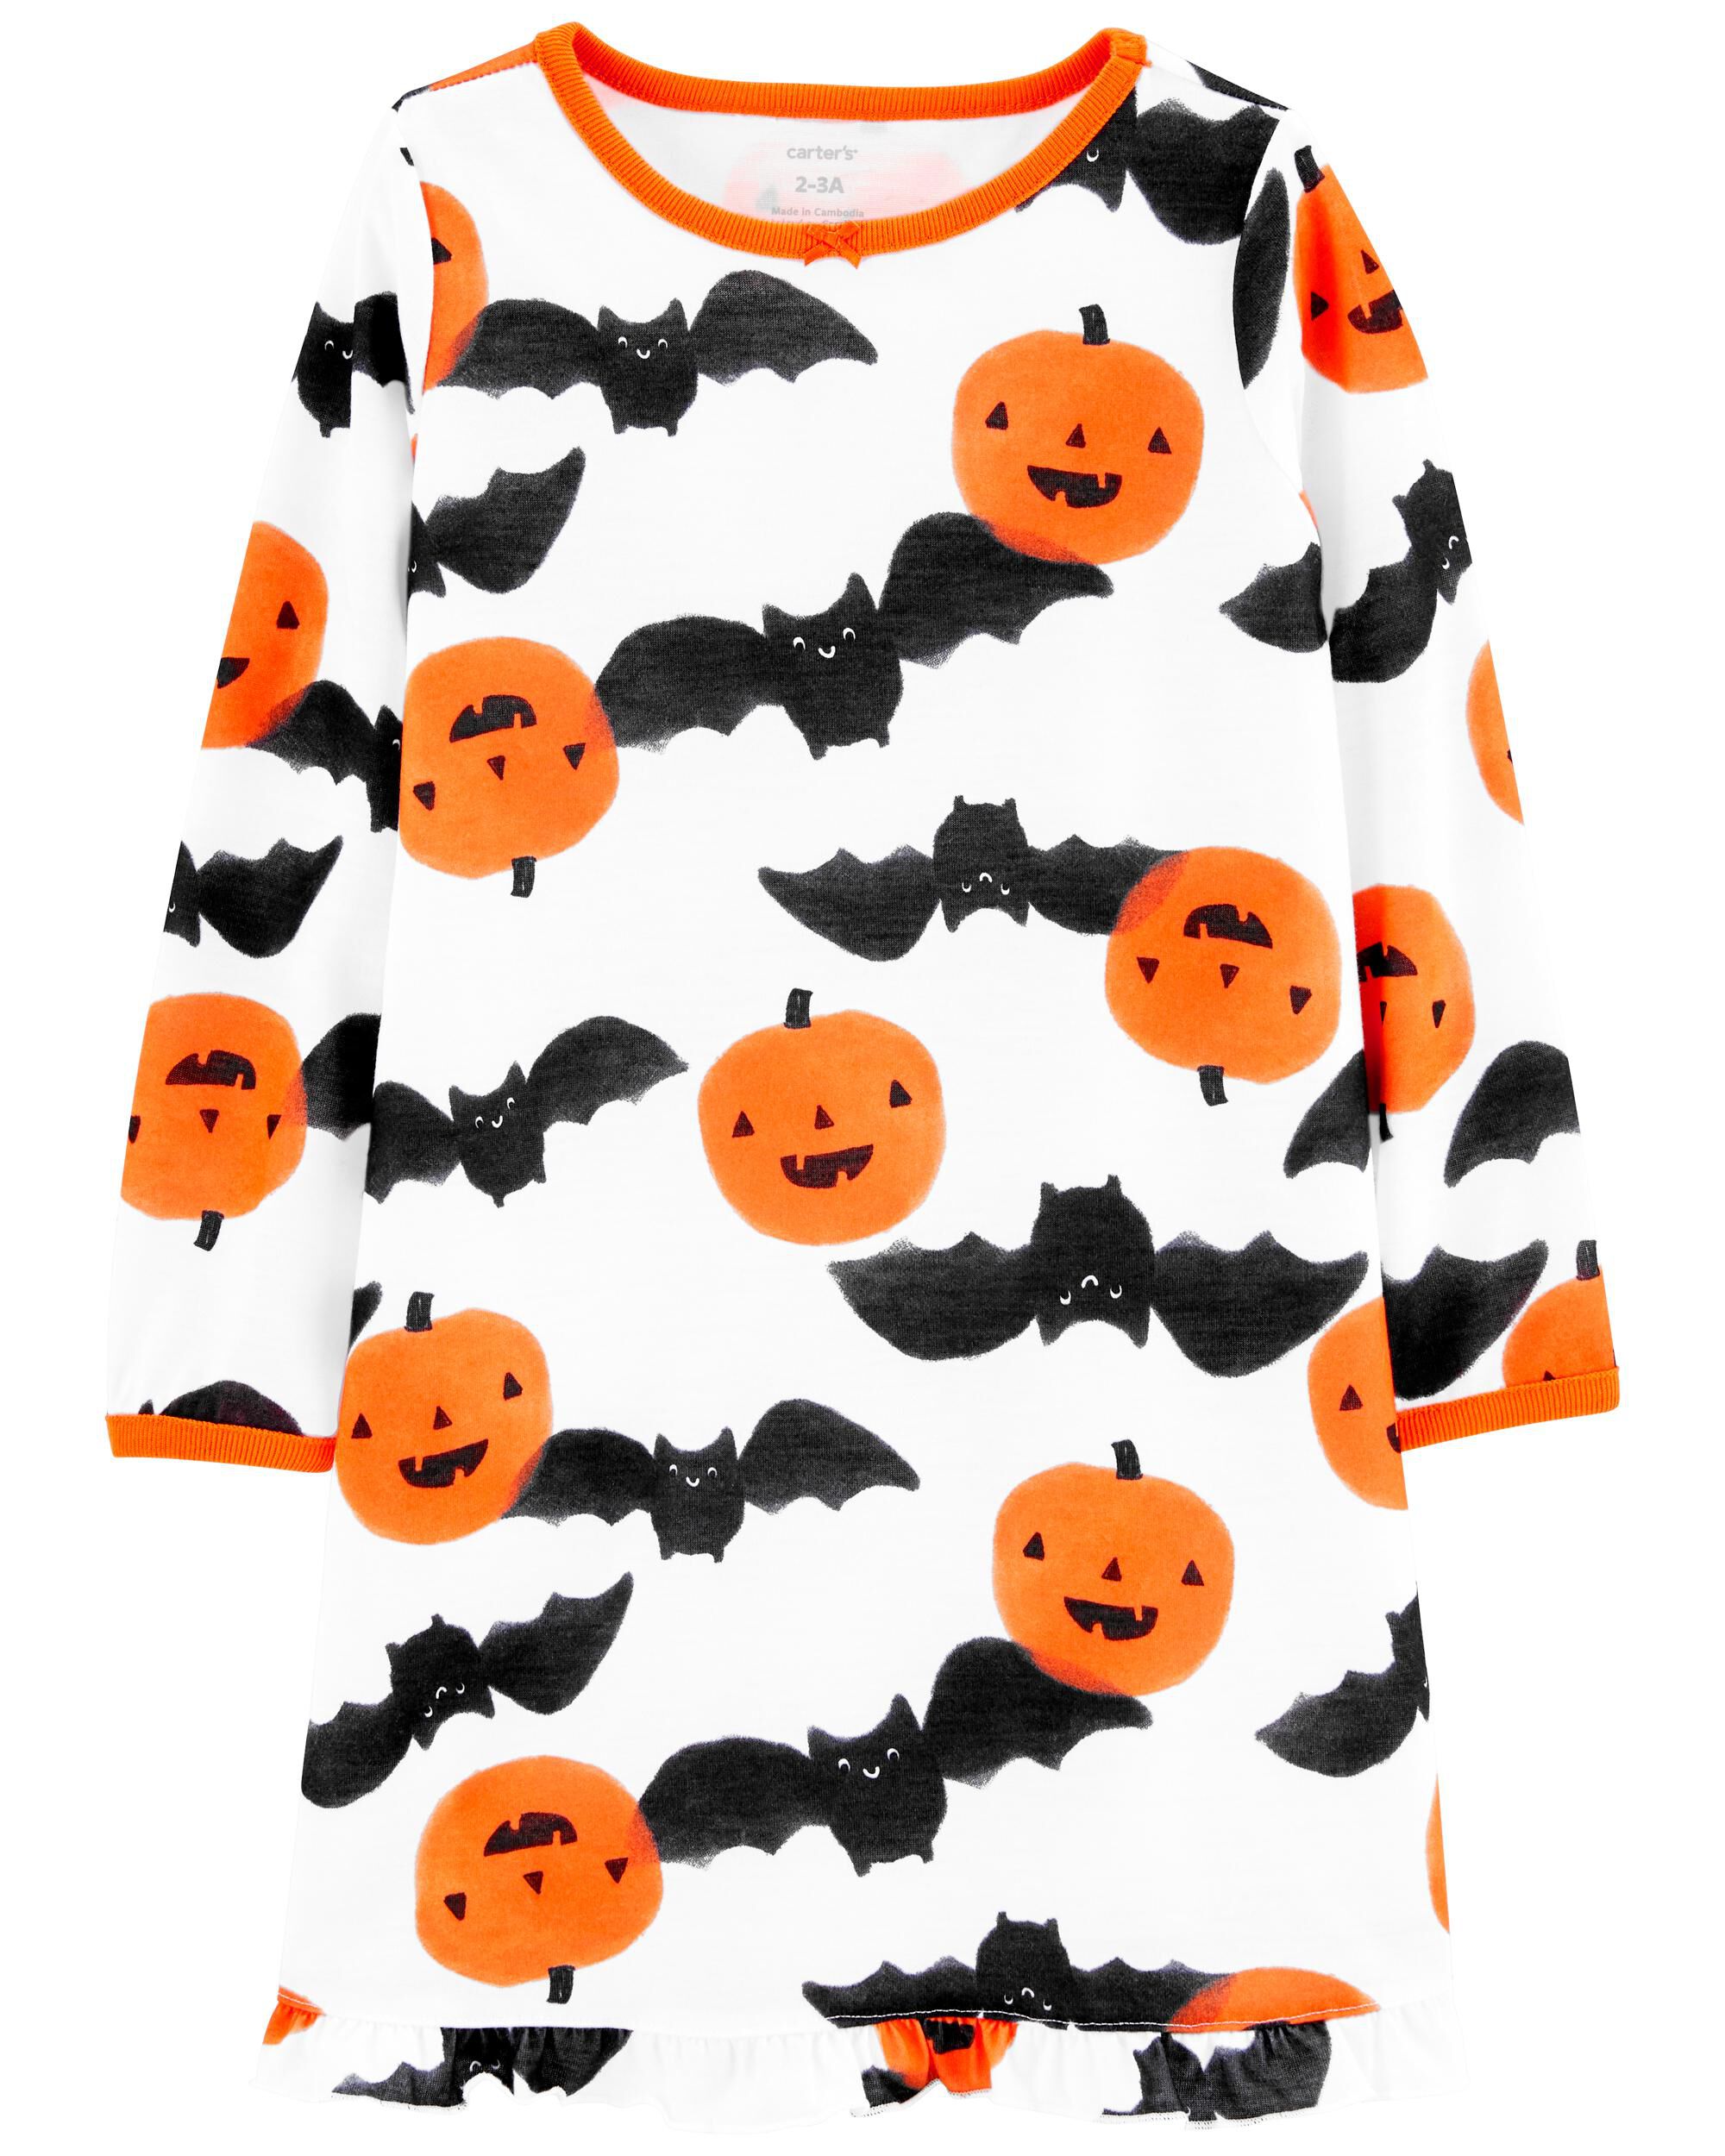 Details about   Carter's 2-pc Set Halloween Top/Pants White/Orange/Black Pumpkin Size 3M NWT 